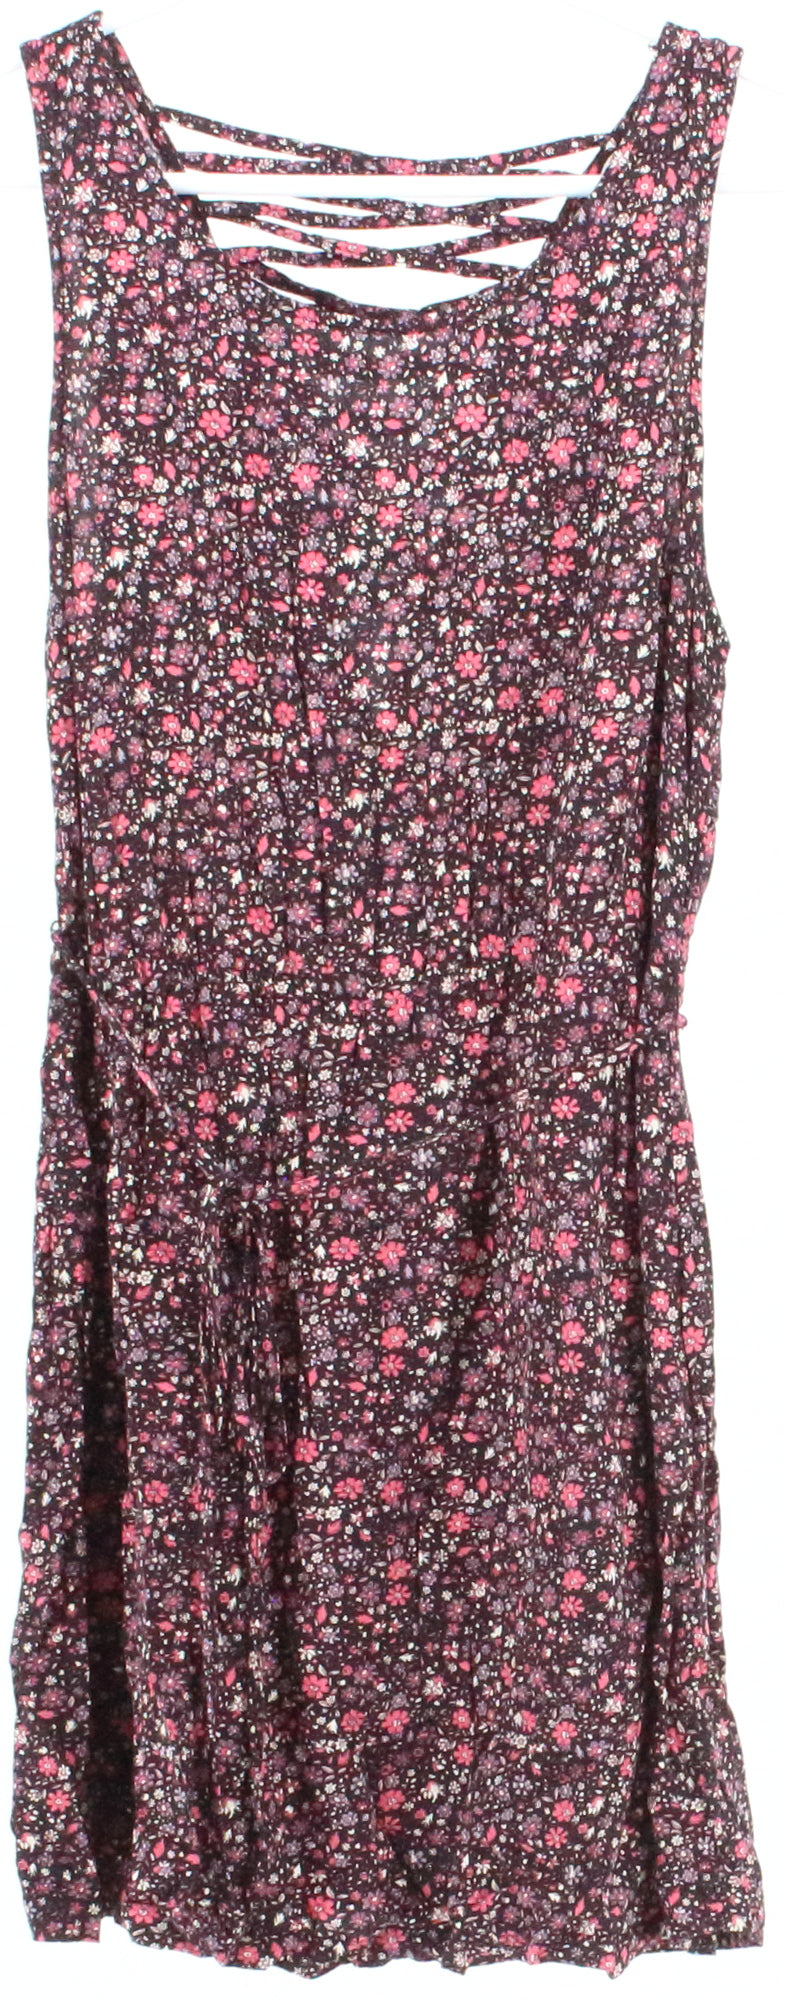 Forever 21 Black and Pink Flower Print Mini Dress